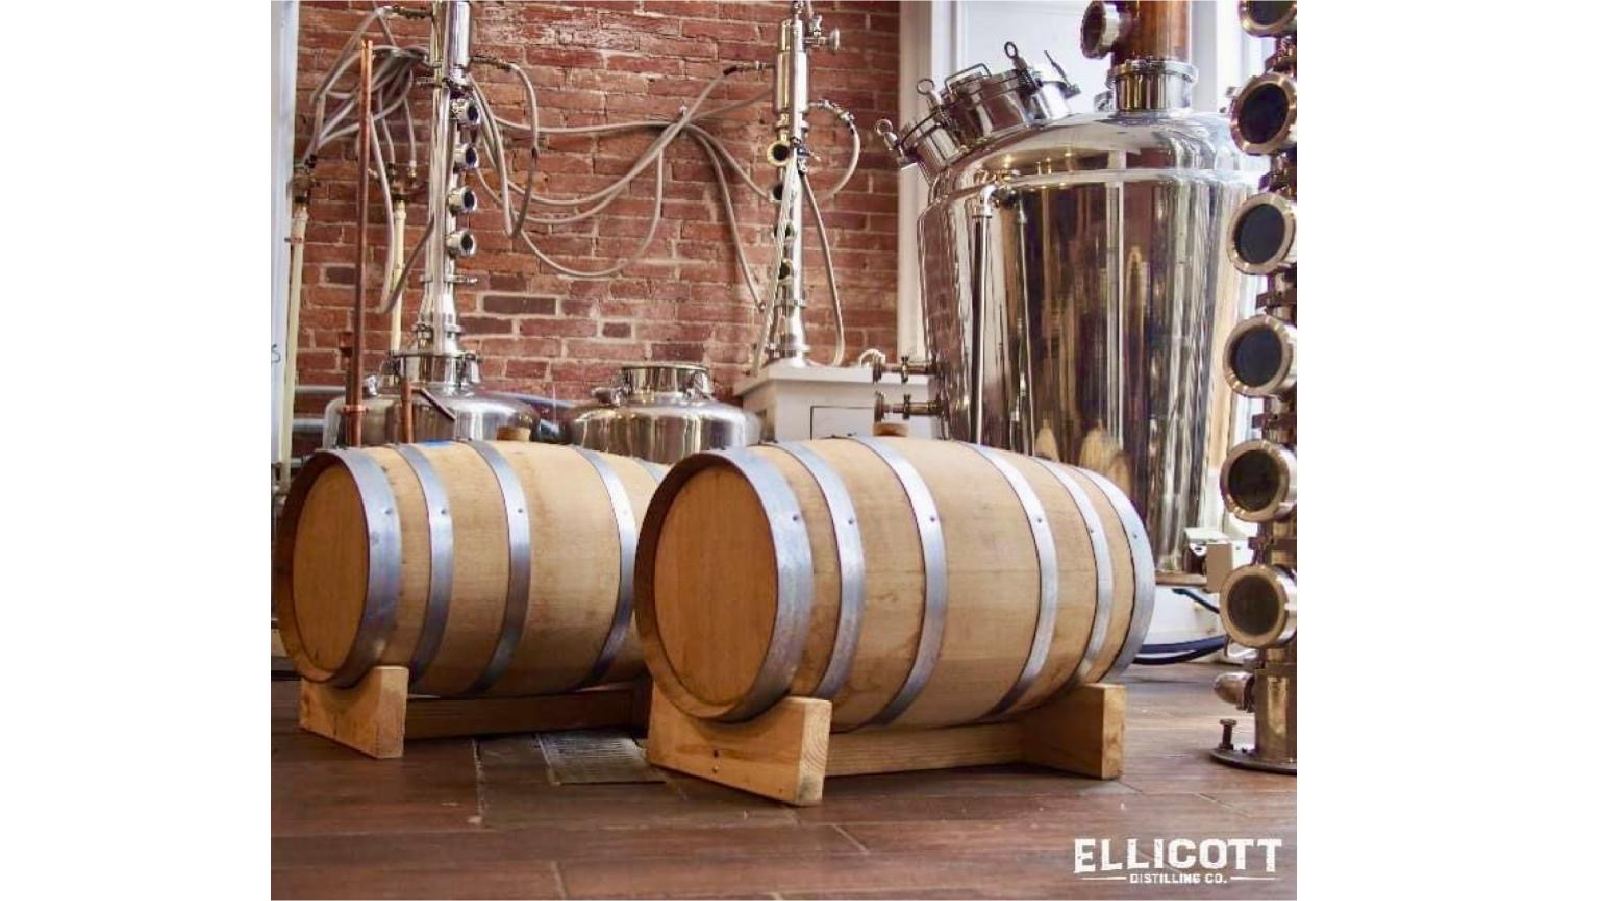 Ellicott Distilling Company